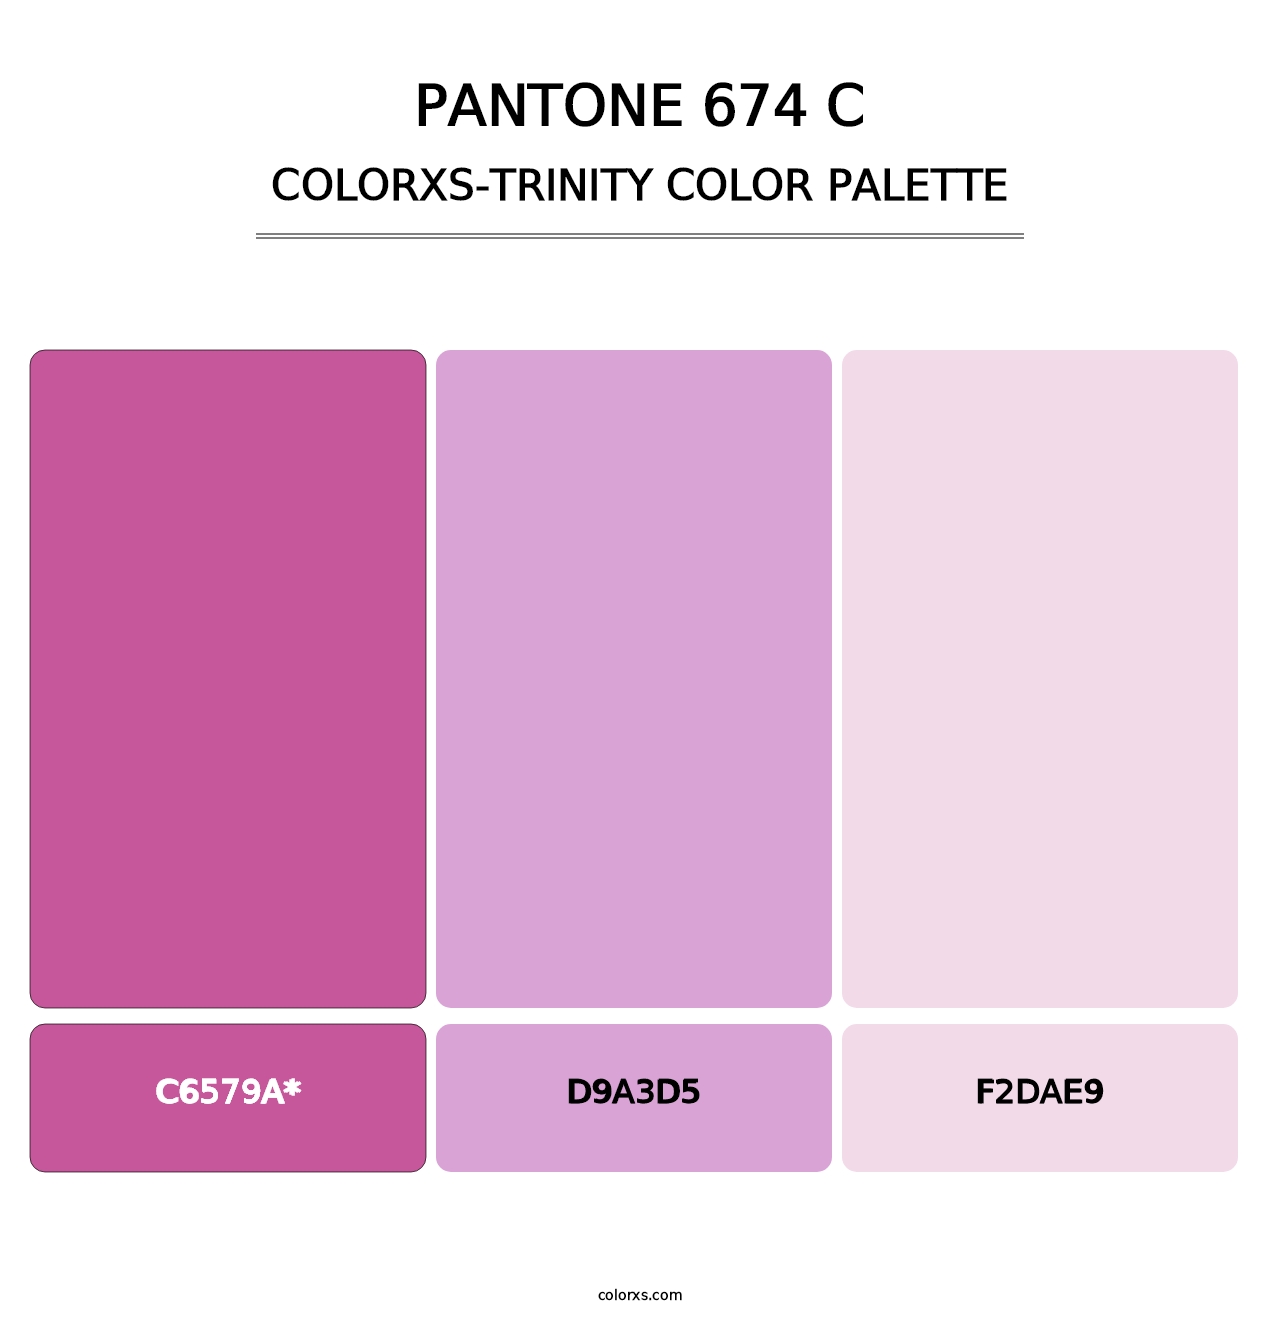 PANTONE 674 C - Colorxs Trinity Palette